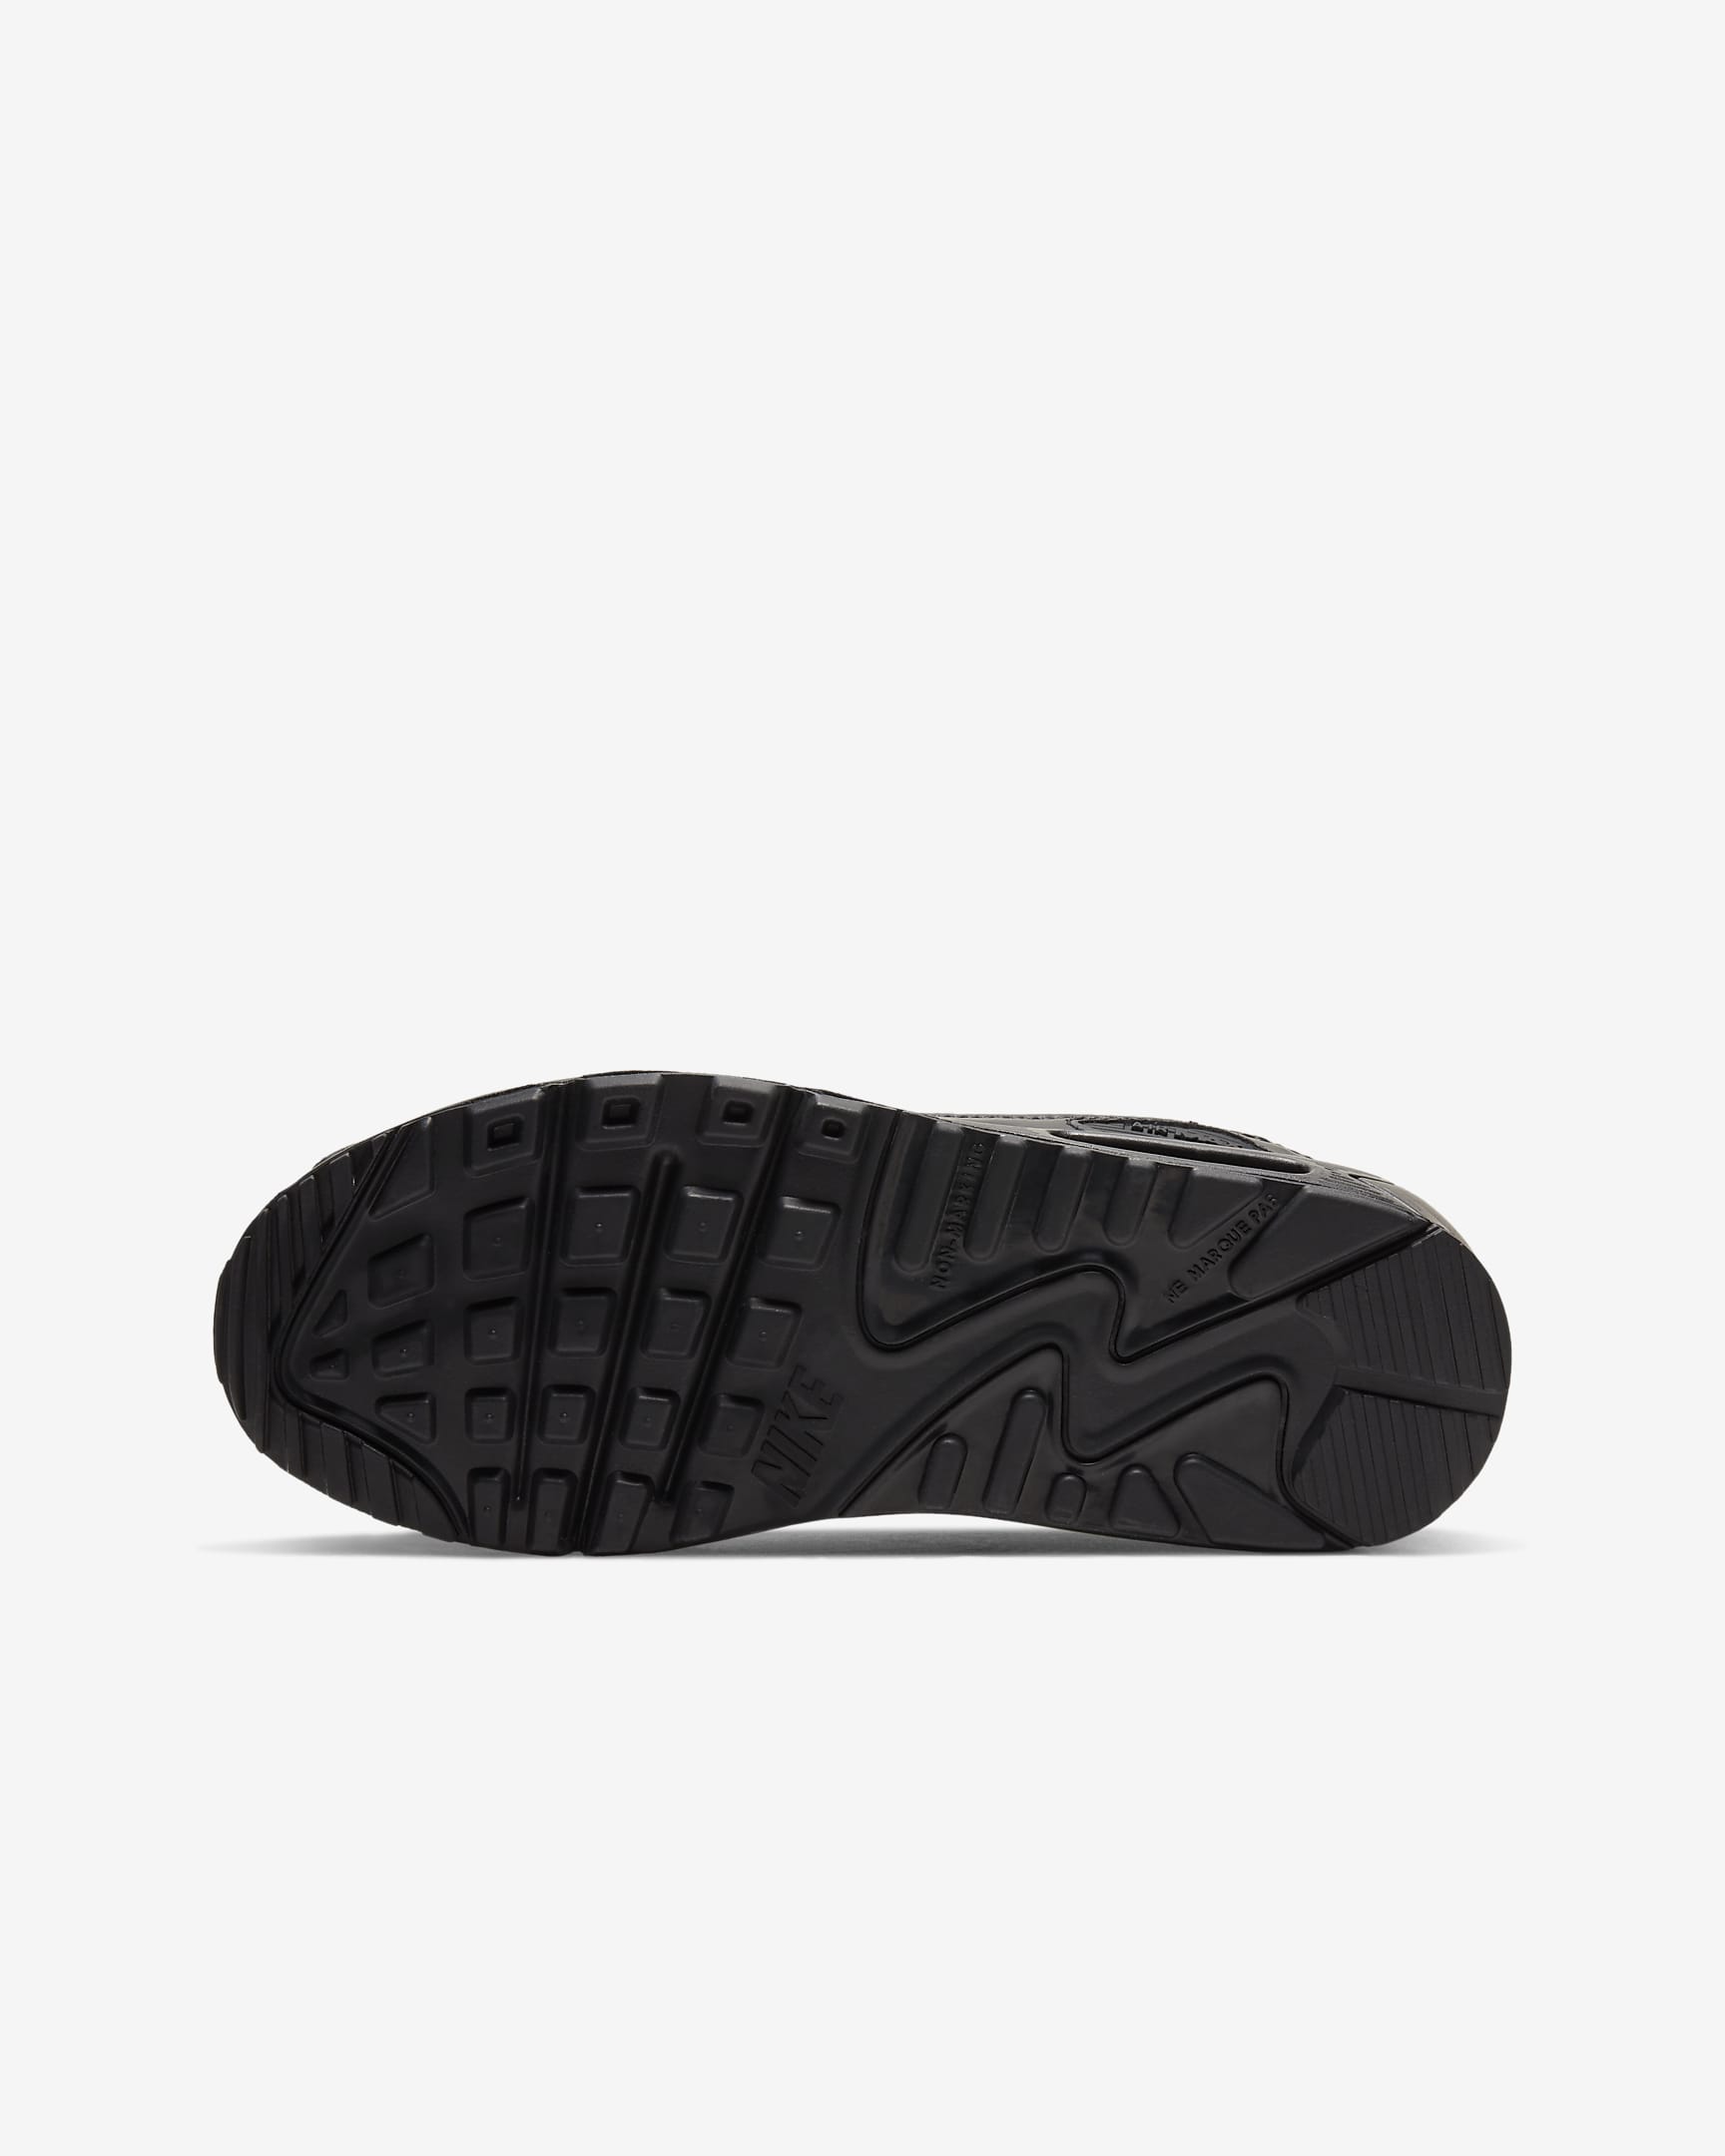 Chaussure Nike Air Max 90 LTR pour ado - Noir/Noir/Blanc/Noir